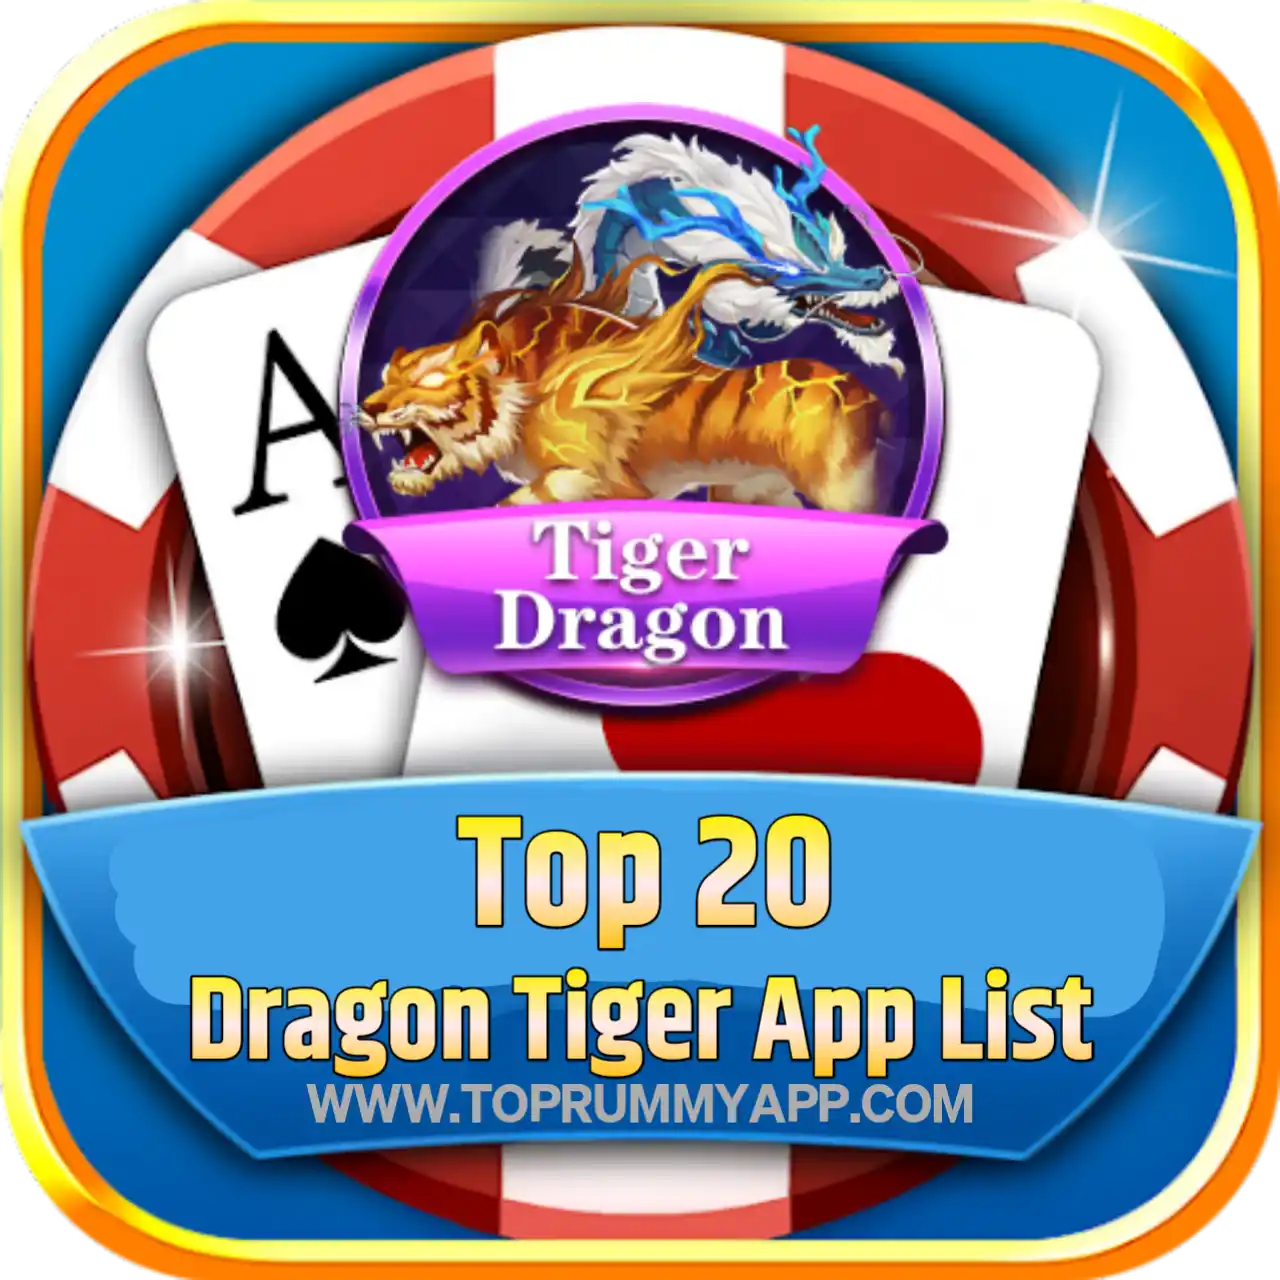 Top 20 Dragon Tiger App List - All Dragon Vs Tiger App List ₹41 Bonus